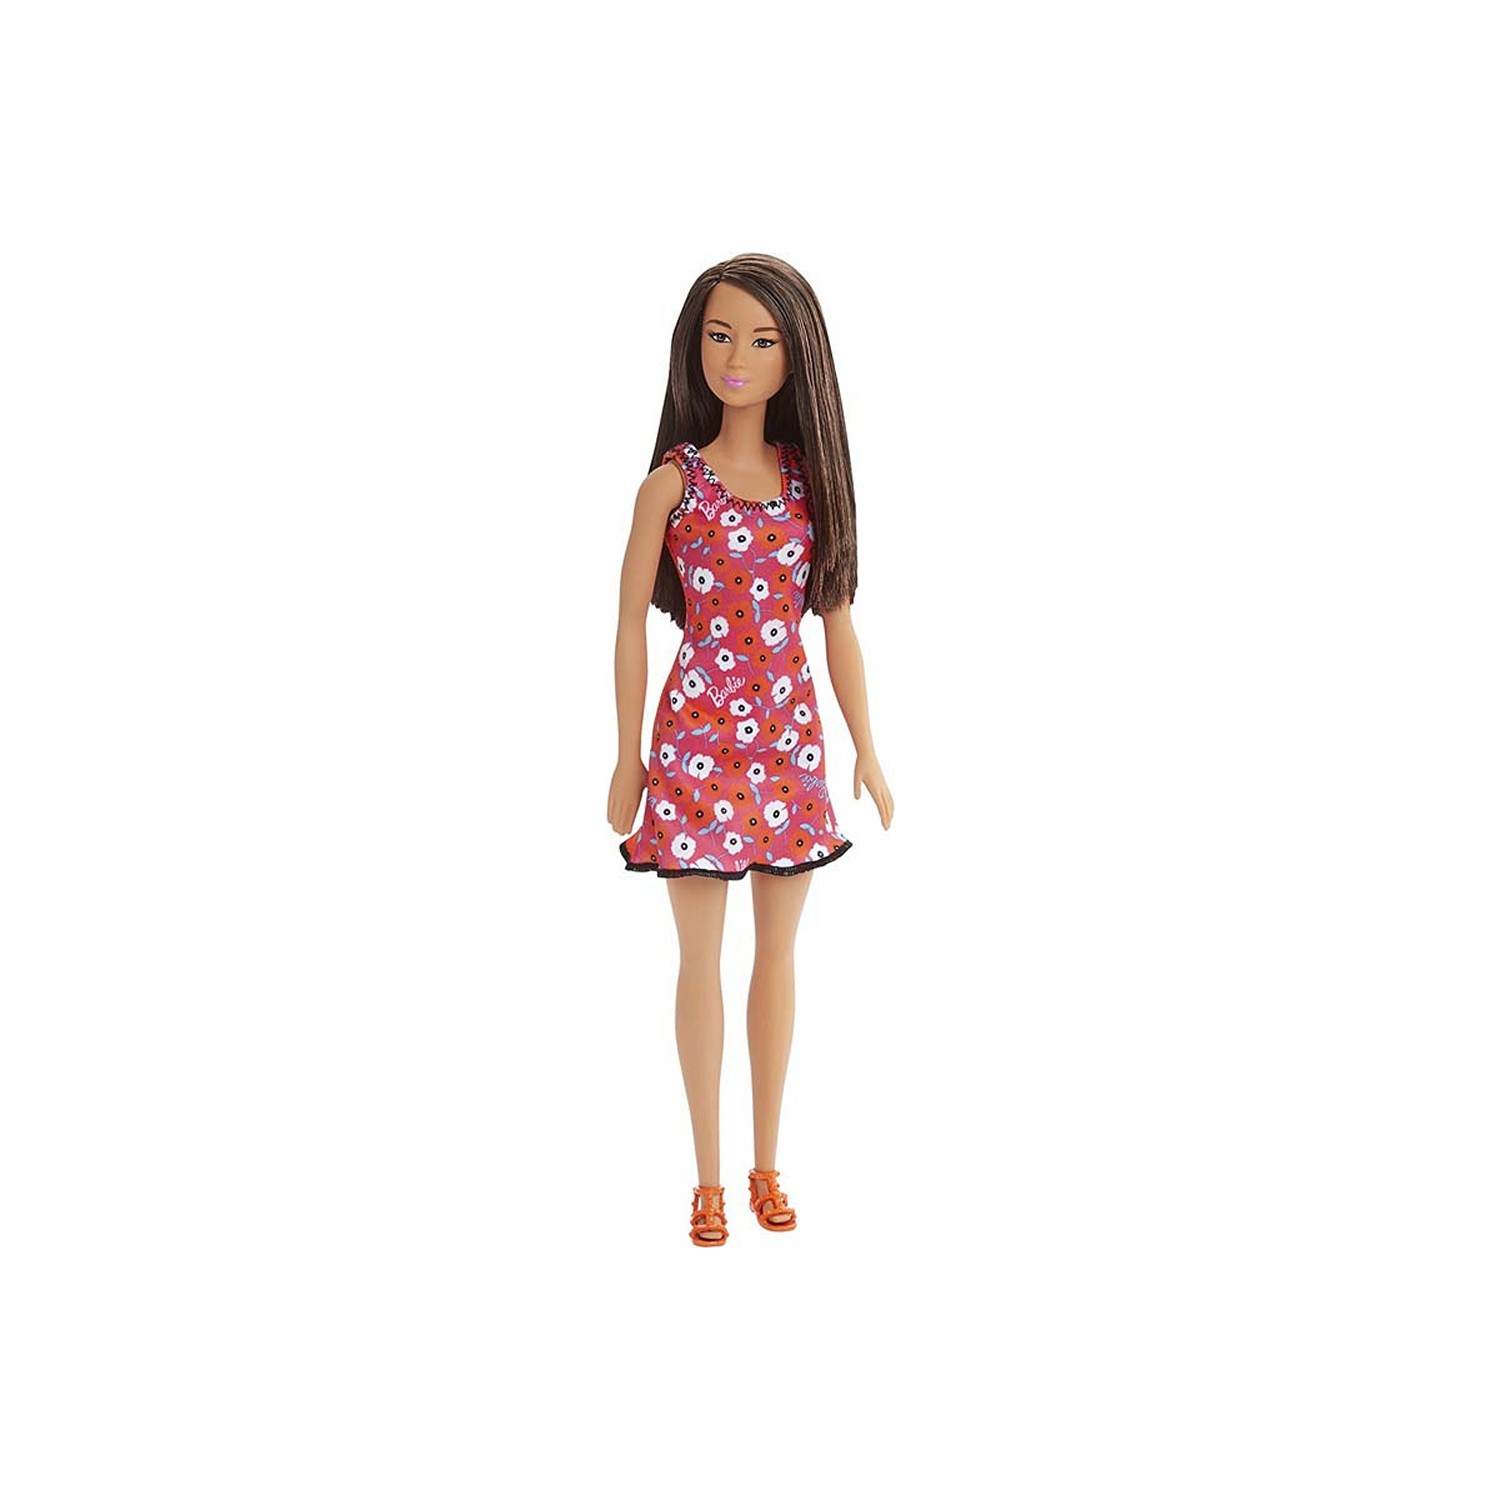 Кукла Barbie Sik DVX90 orange floral lace 11 5 doll dress for barbie clothes gown princess outfits for barbie doll clothes 1 6 bjd accessories toy 1 6